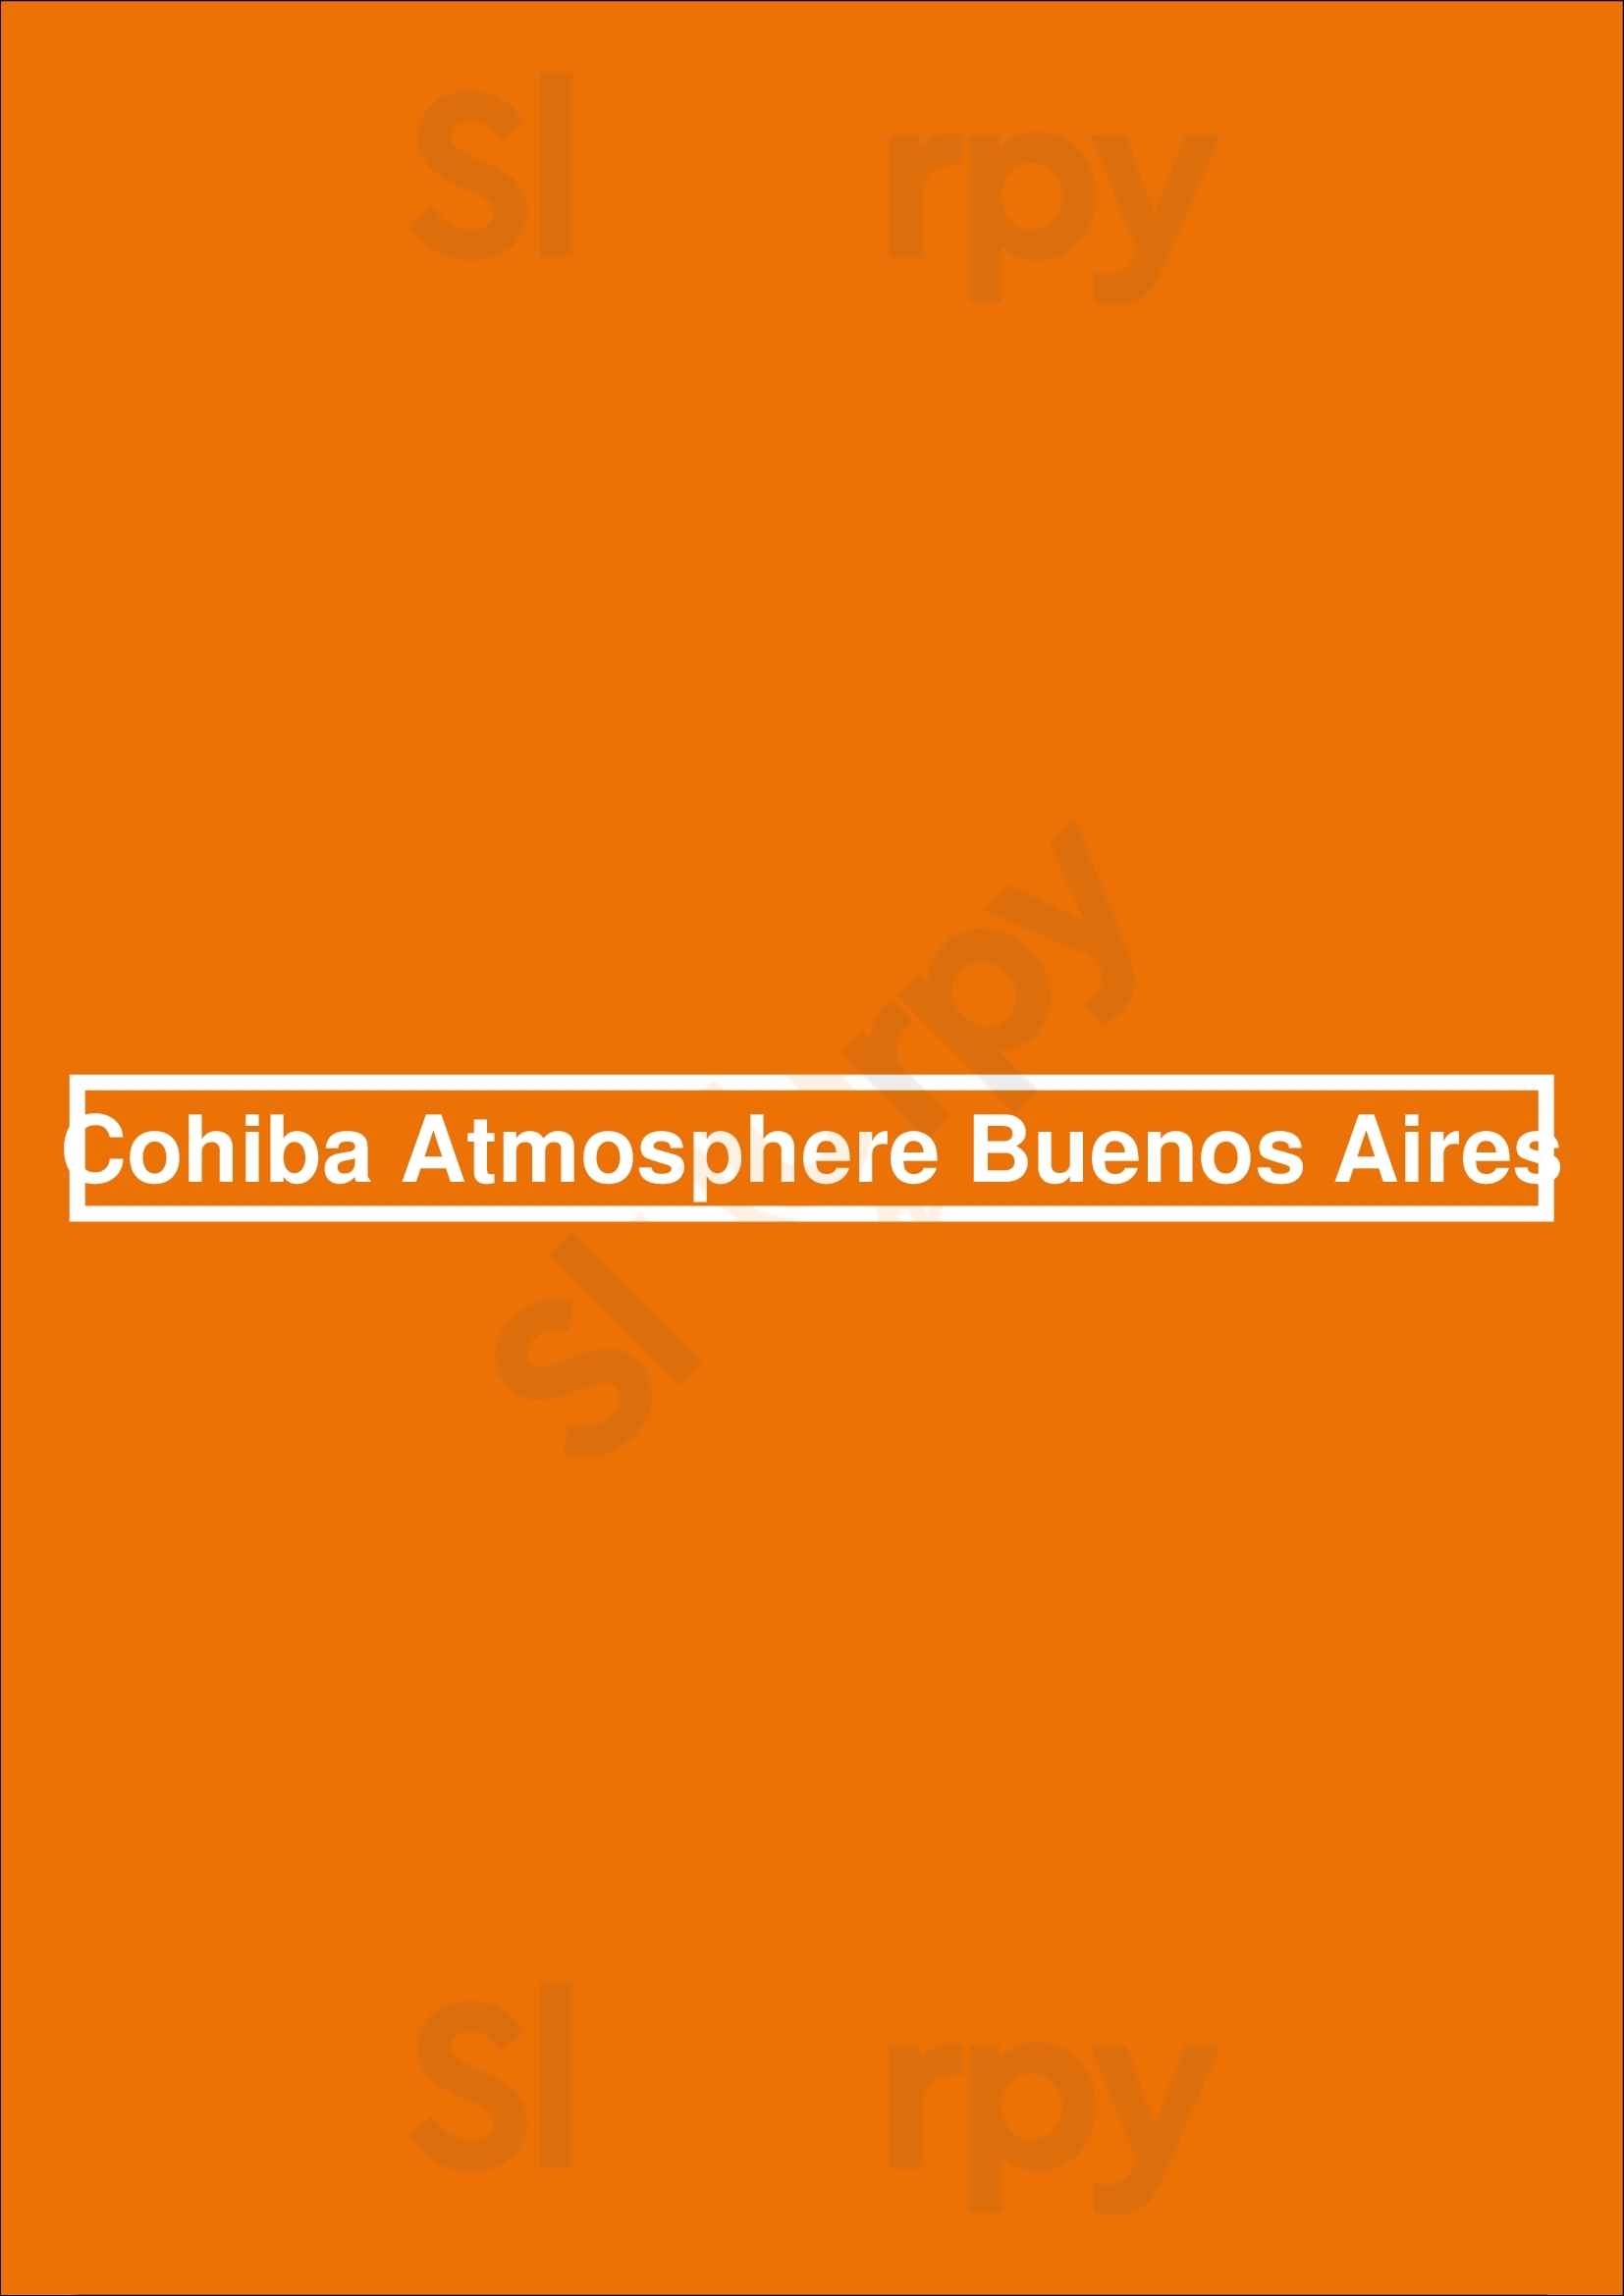 Cohiba Atmosphere Buenos Aires Buenos Aires Menu - 1